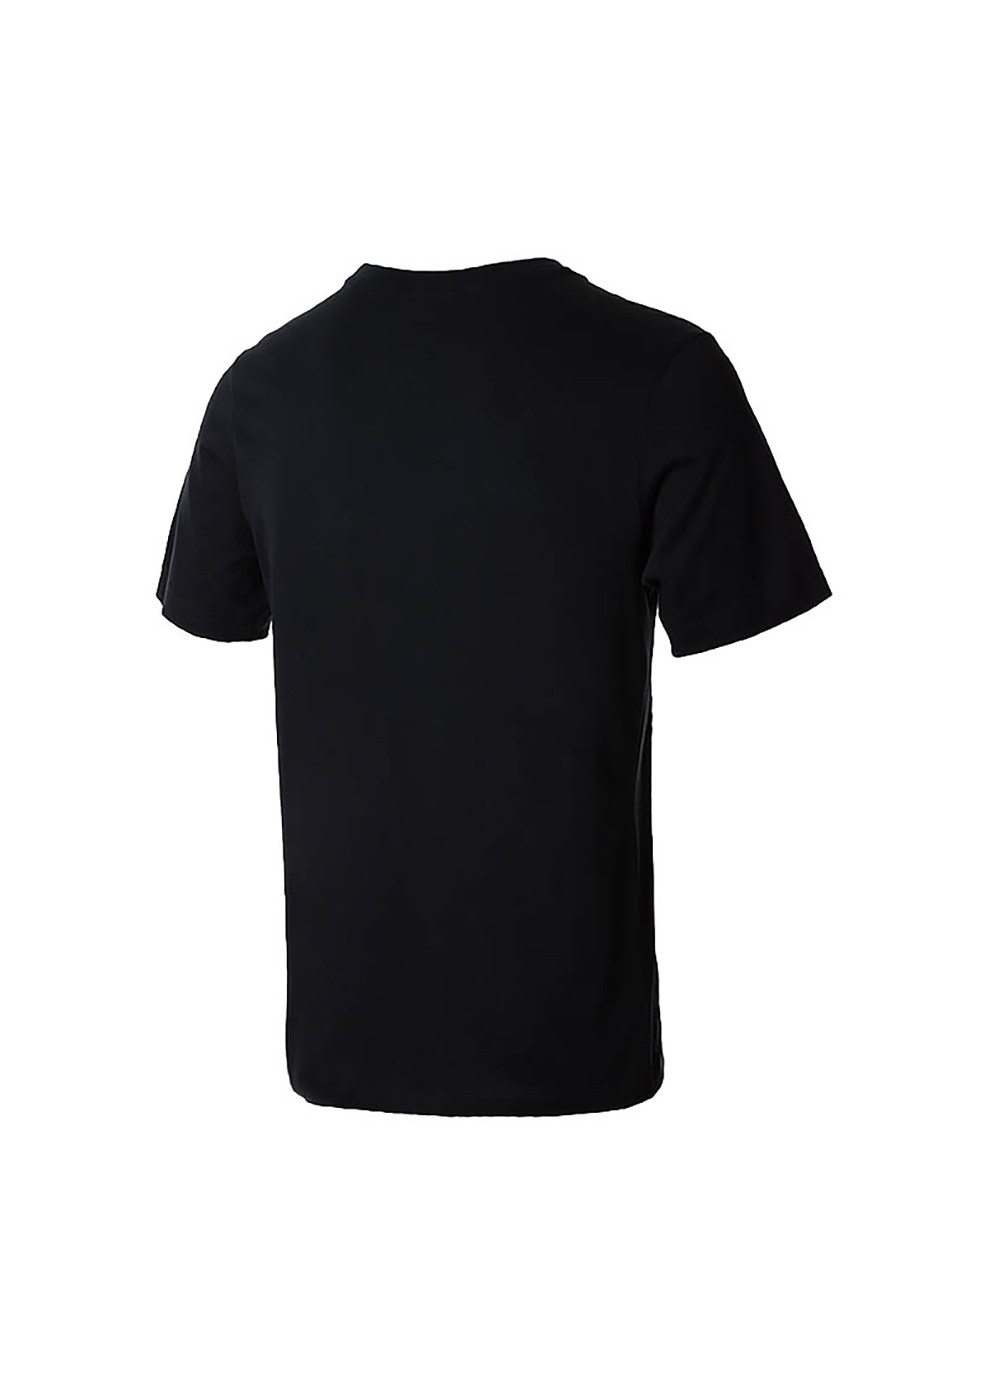 Черная мужская футболка u nk df tee hbr черный Nike